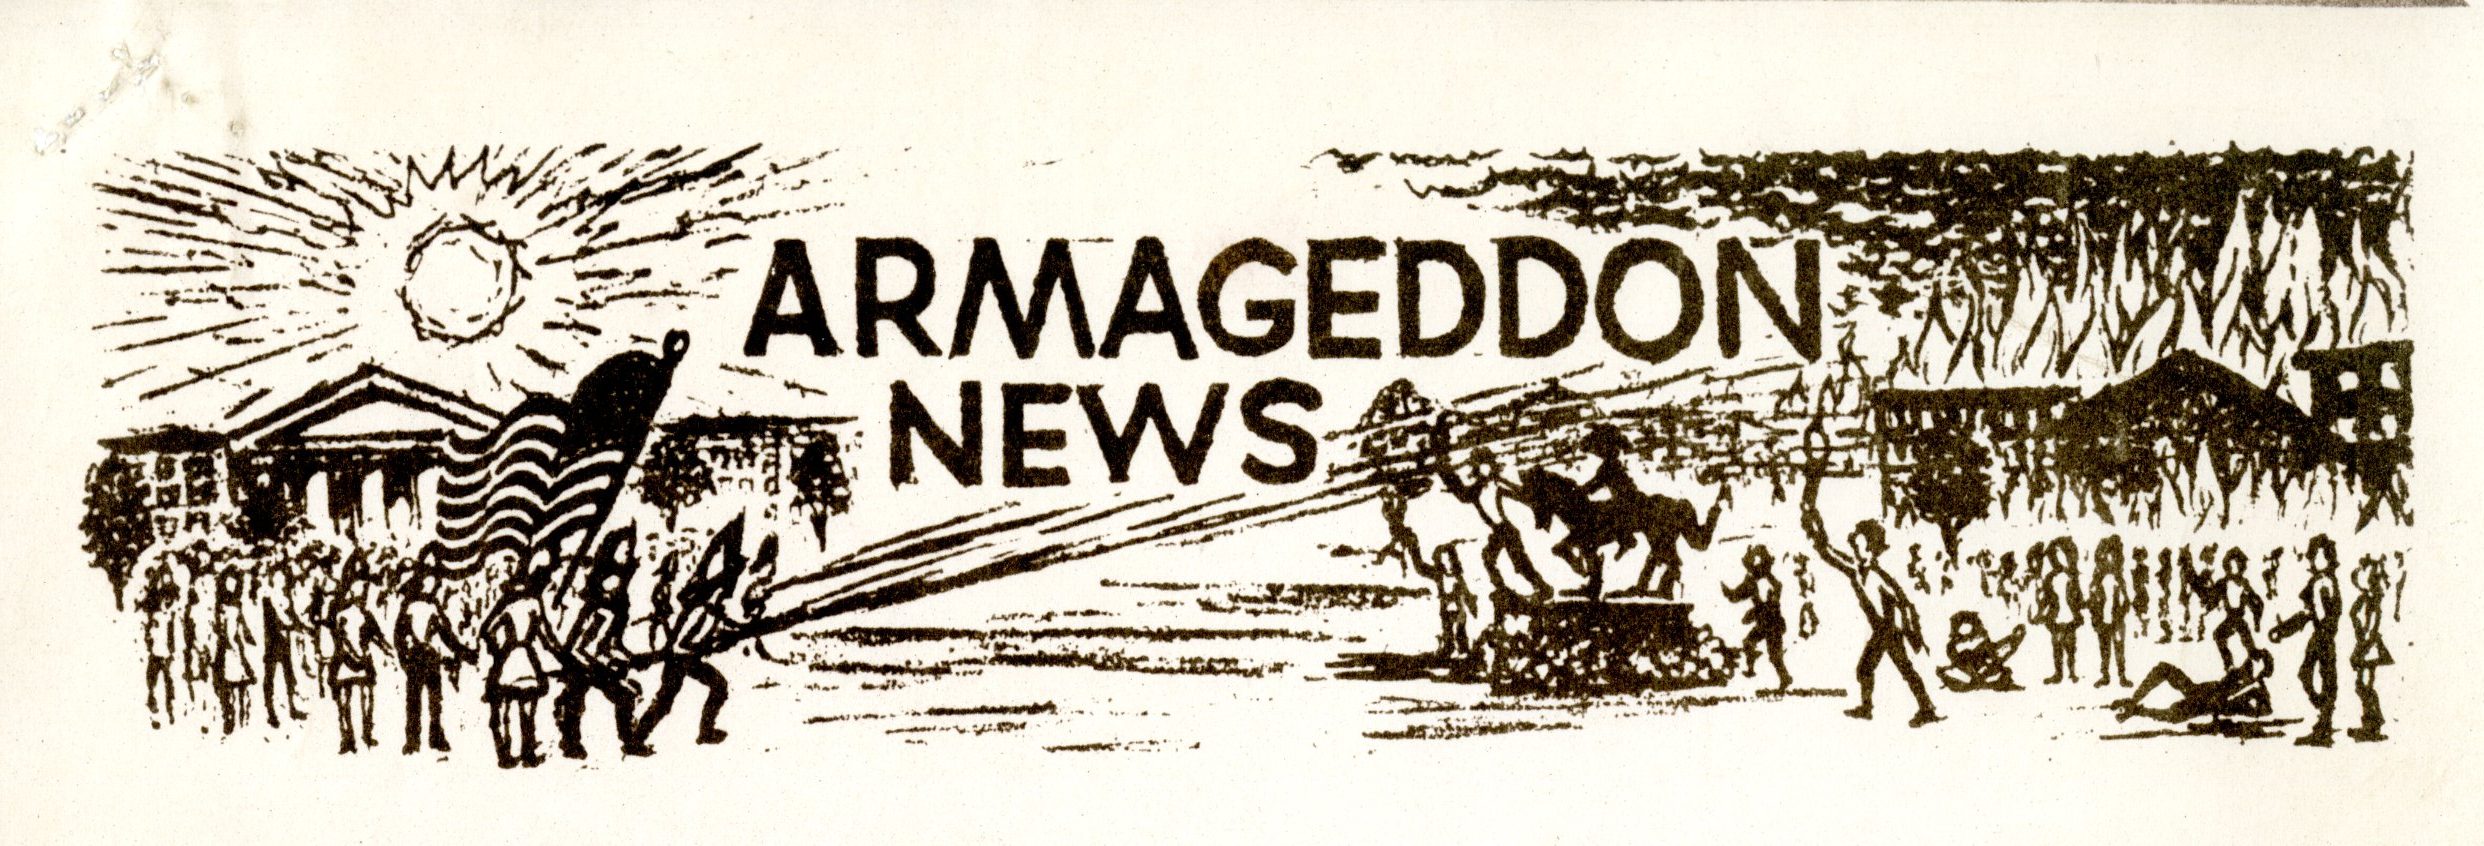 Armageddon News masthead